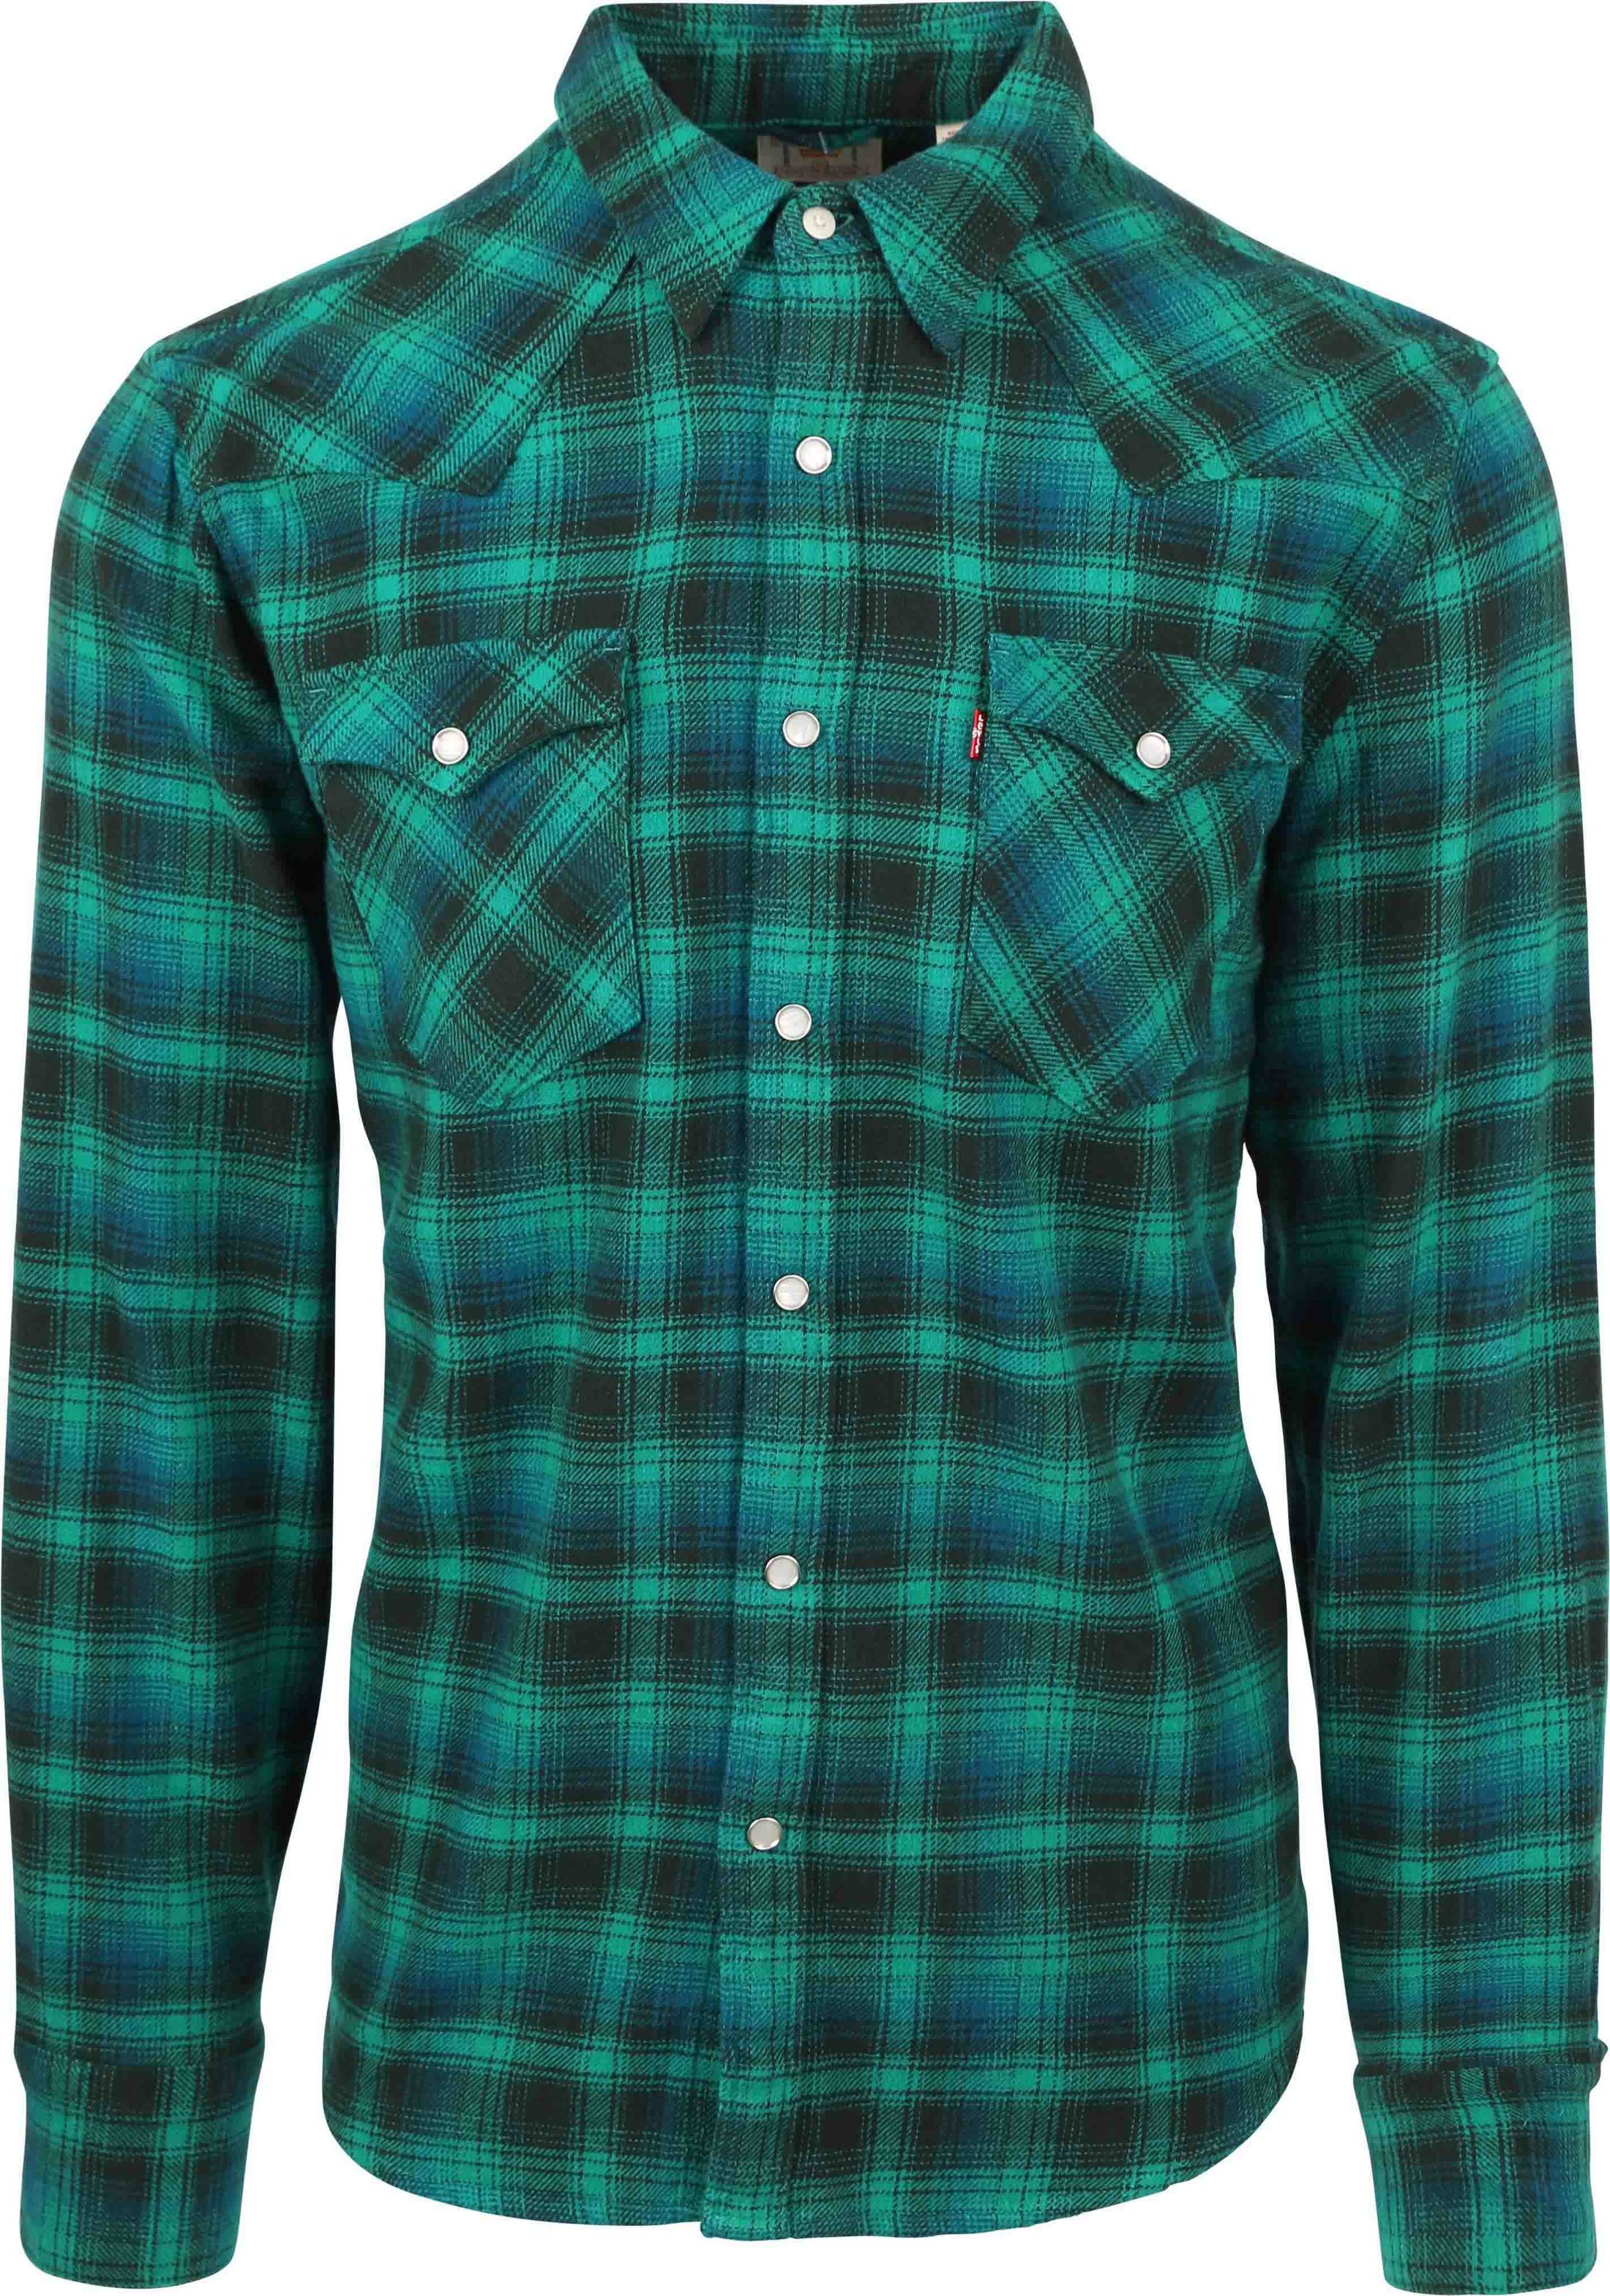 Levi's Overshirt Green size XL product